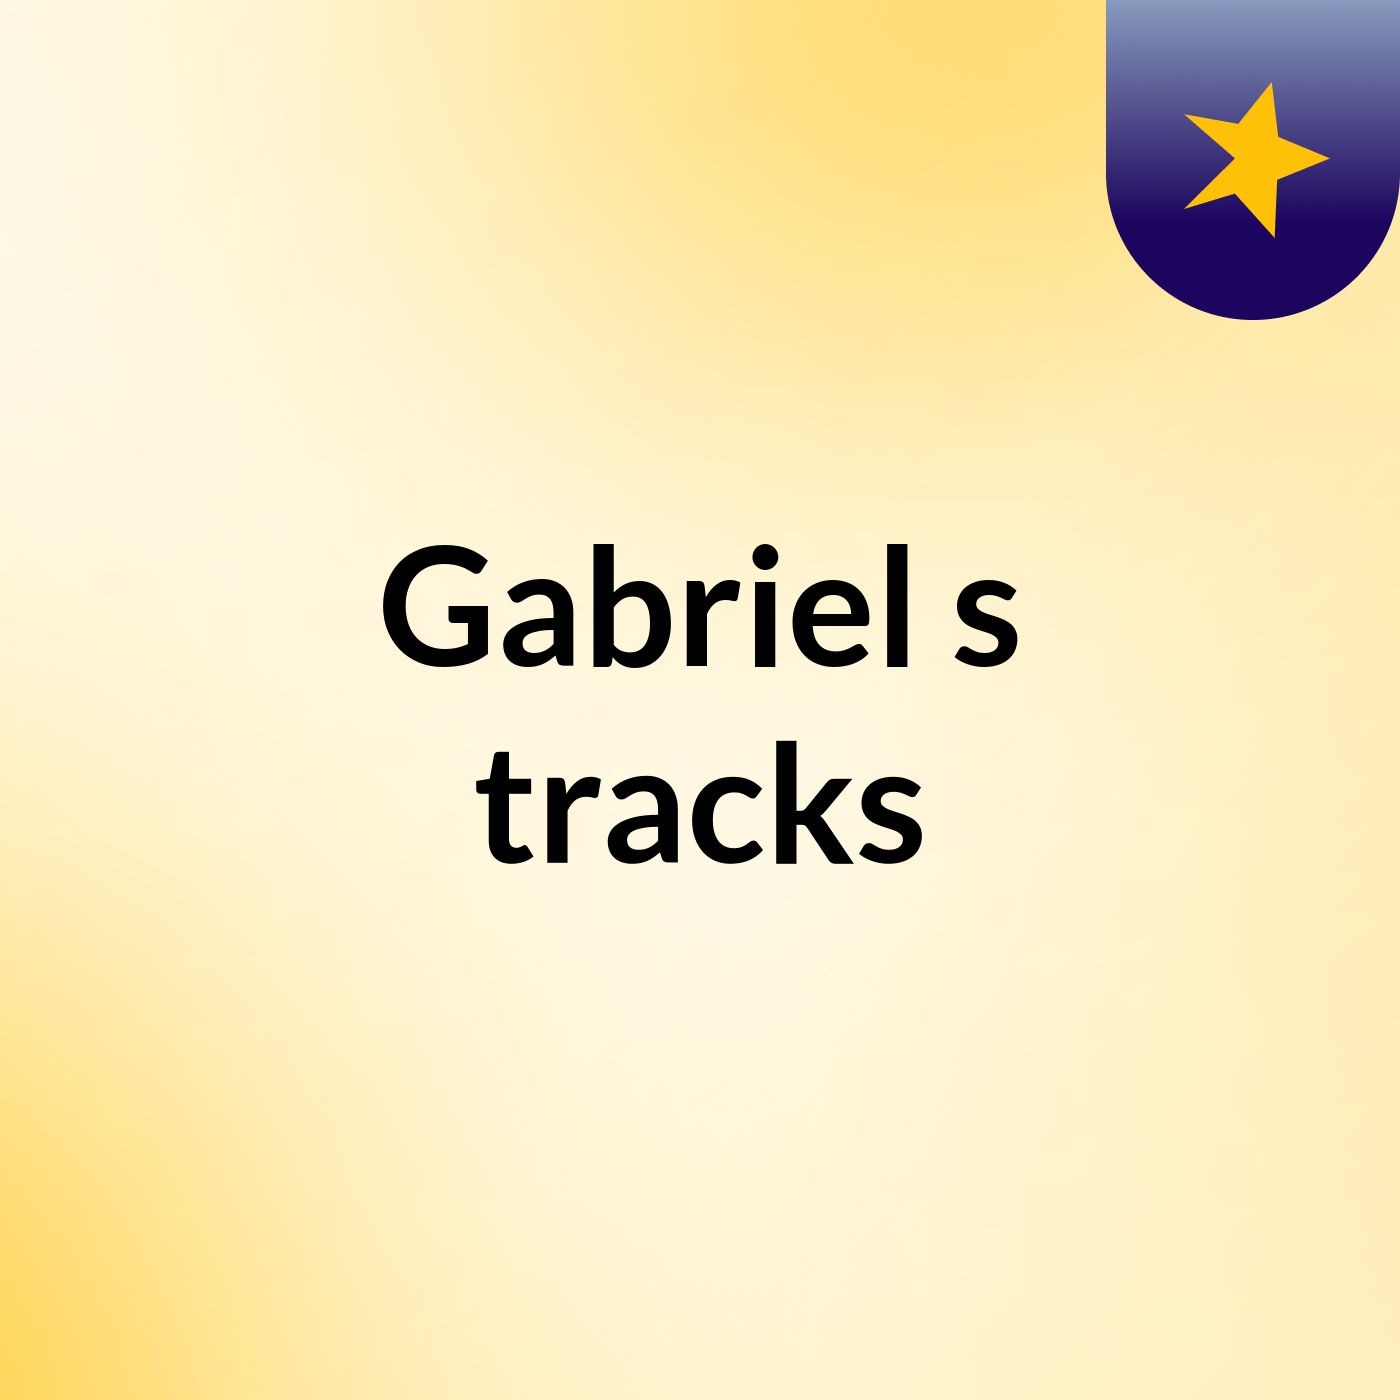 Gabriel's tracks